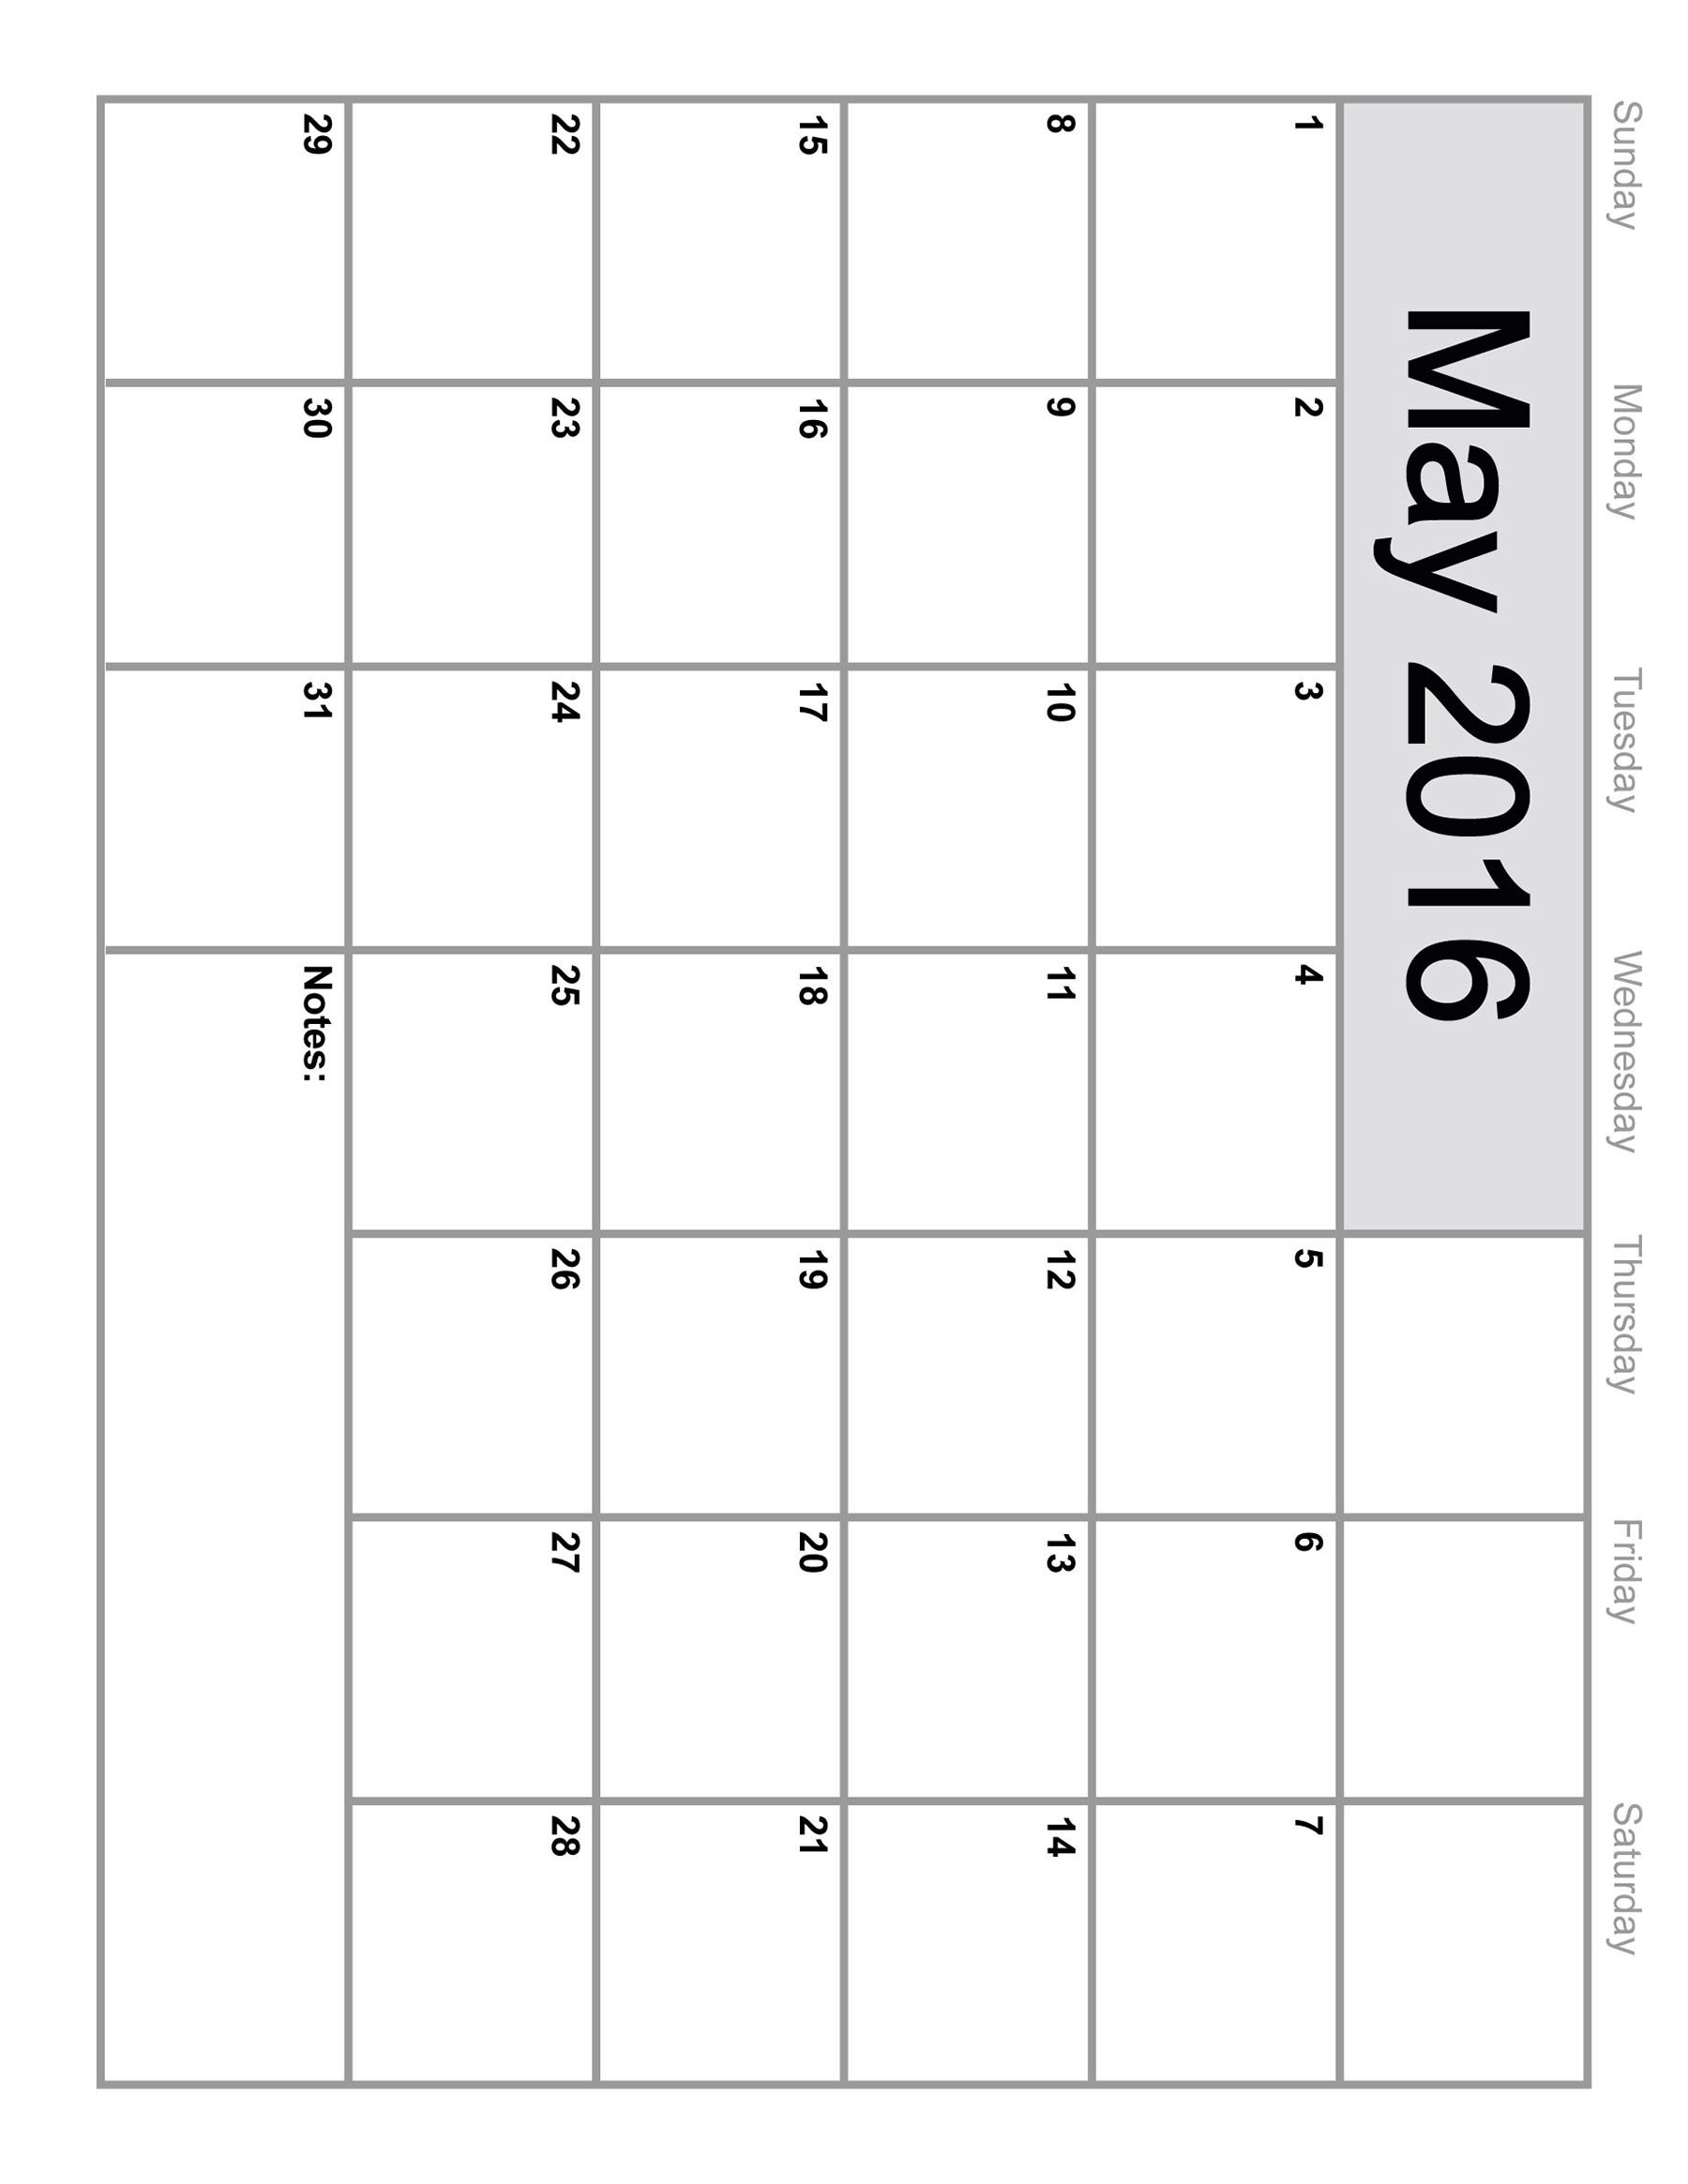 8 X 10 Print Calendar | Holidays Calendar Template 8 X 10 Blank Calendar